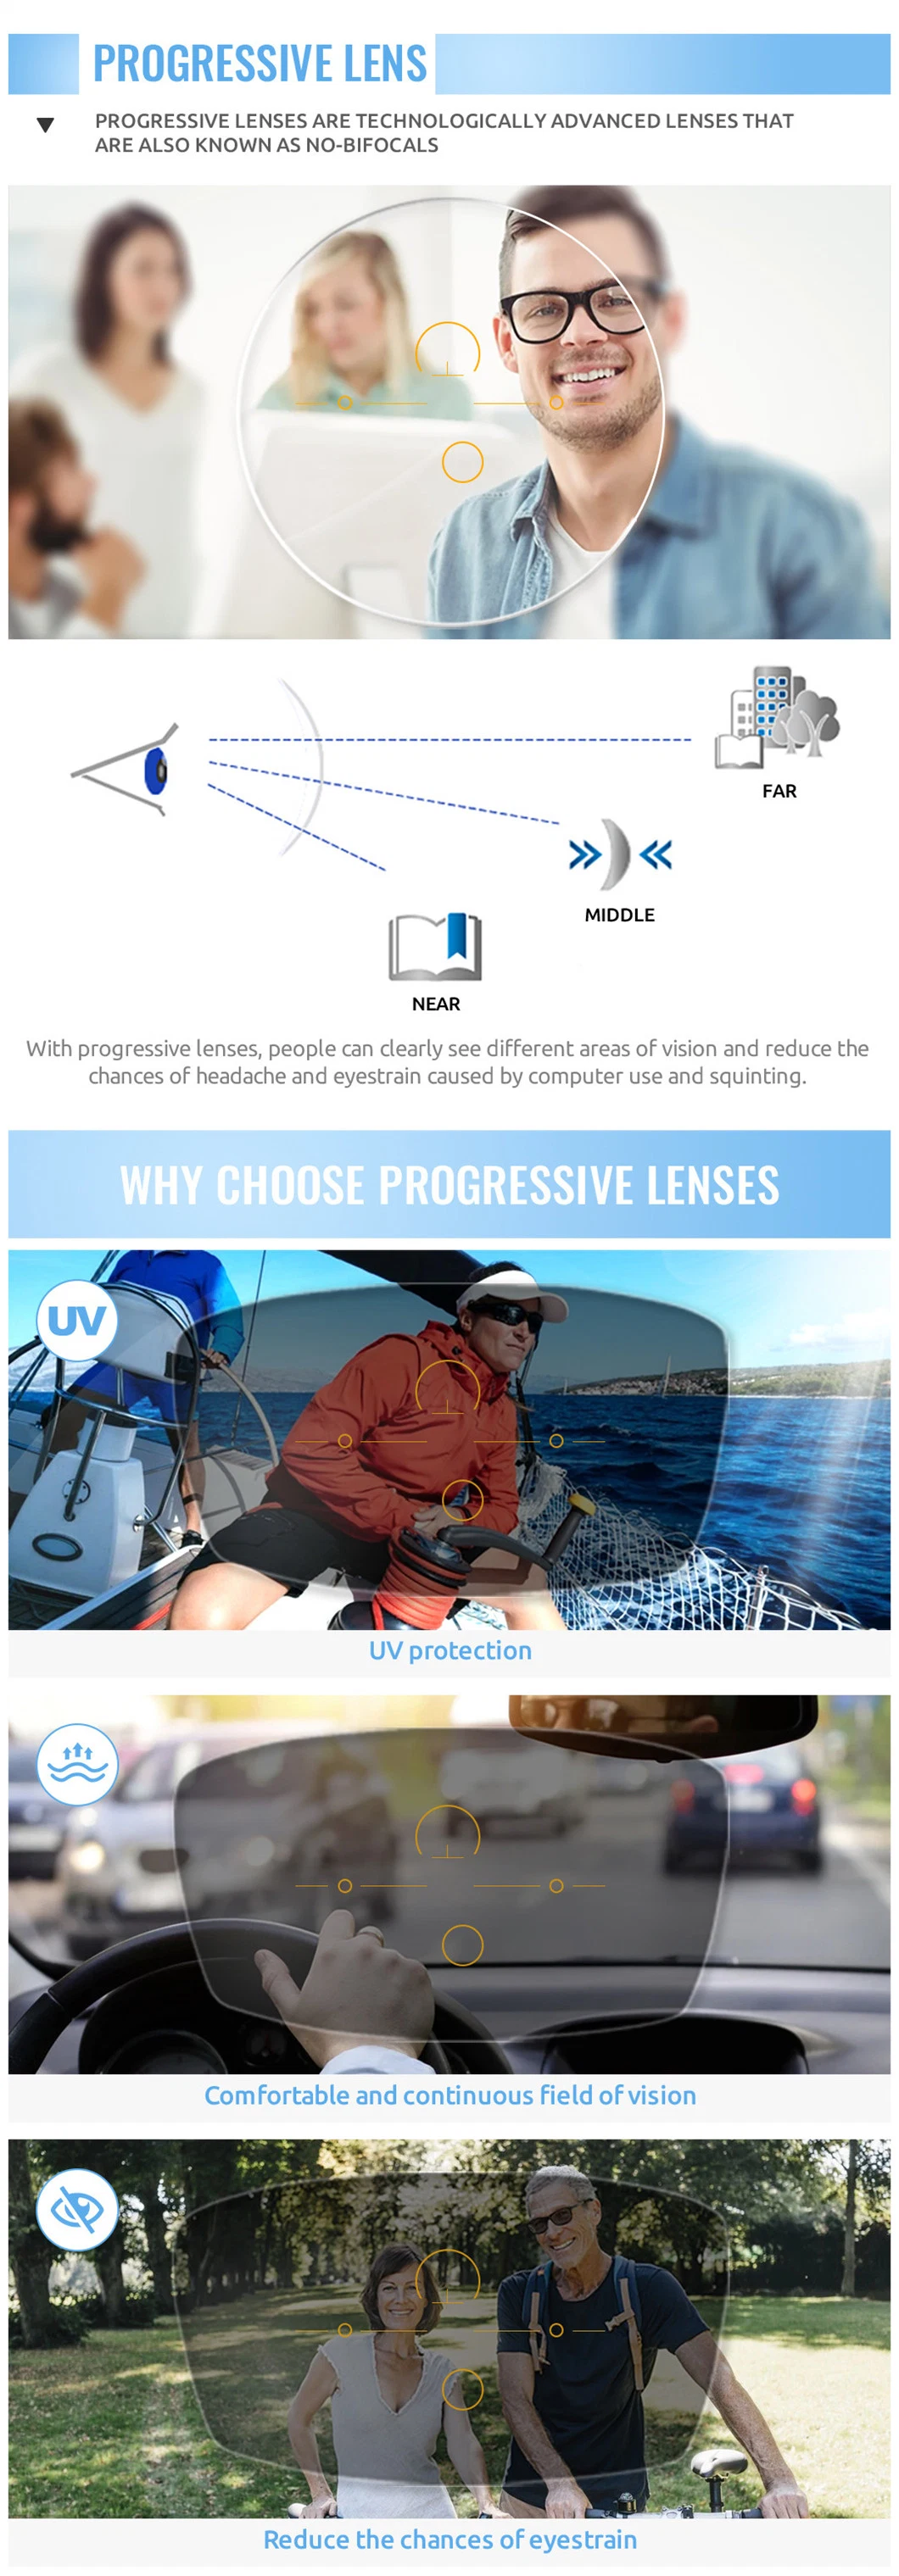 Anti Blue Ray Glasses Lens 1.56 Blue Cut UV420 Photochromic Progressive Lens